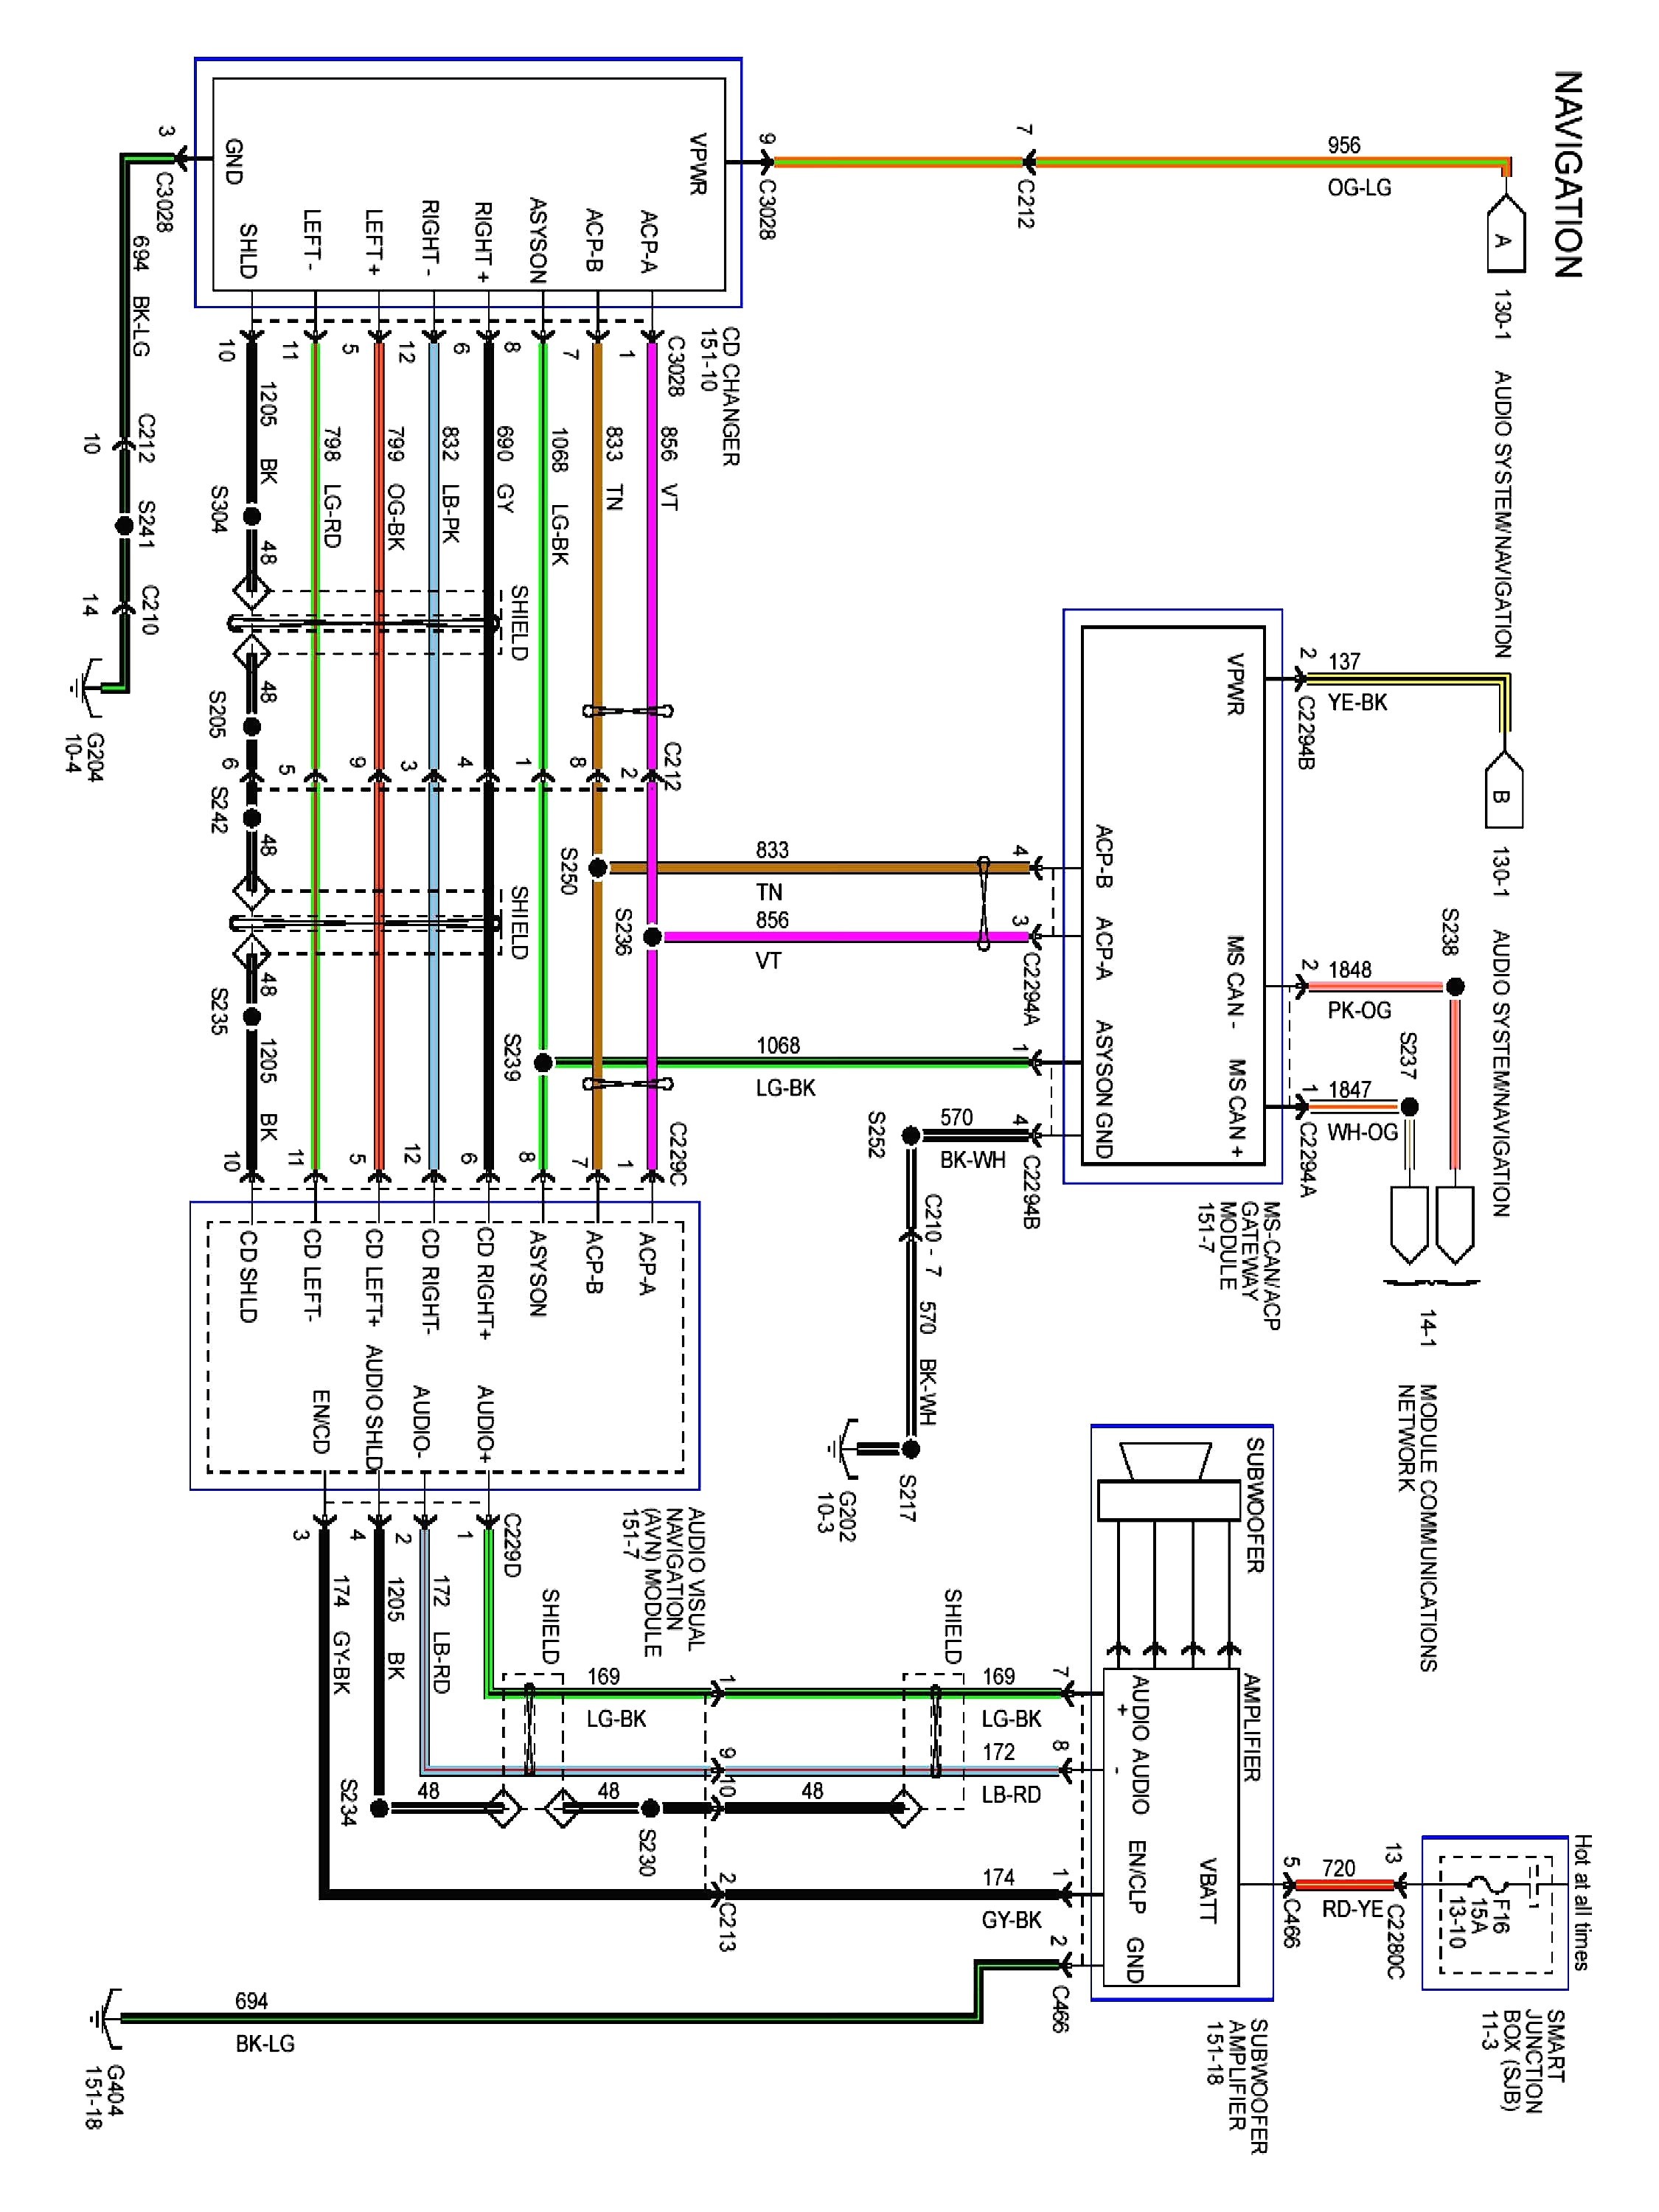 Car Stereo Amplifier Wiring Diagram Amplifier Wiring Diagrams Wiring Diagram toolbox Of Car Stereo Amplifier Wiring Diagram